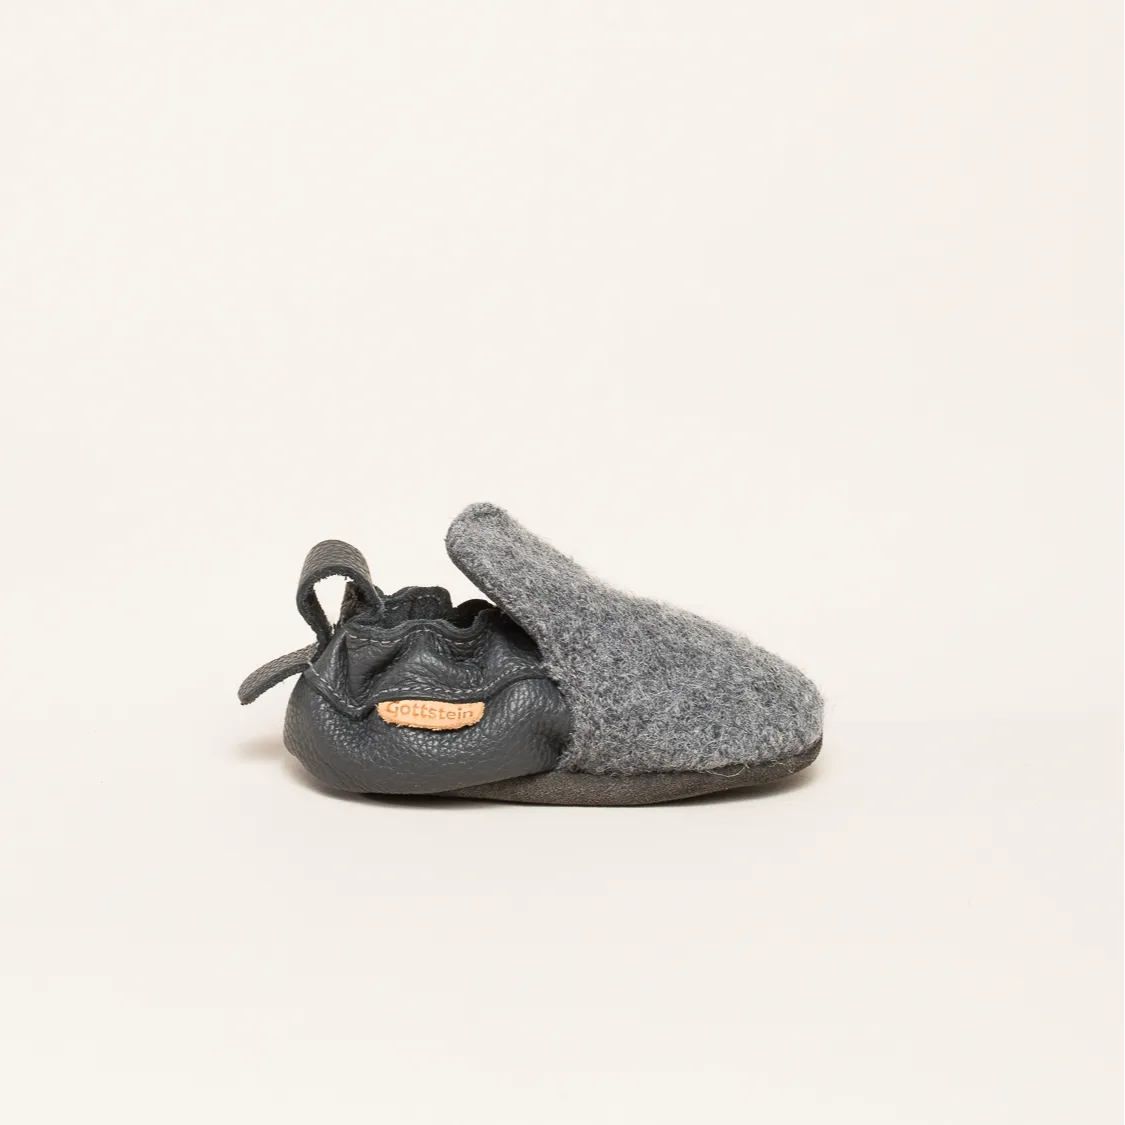 Baby shoe plain